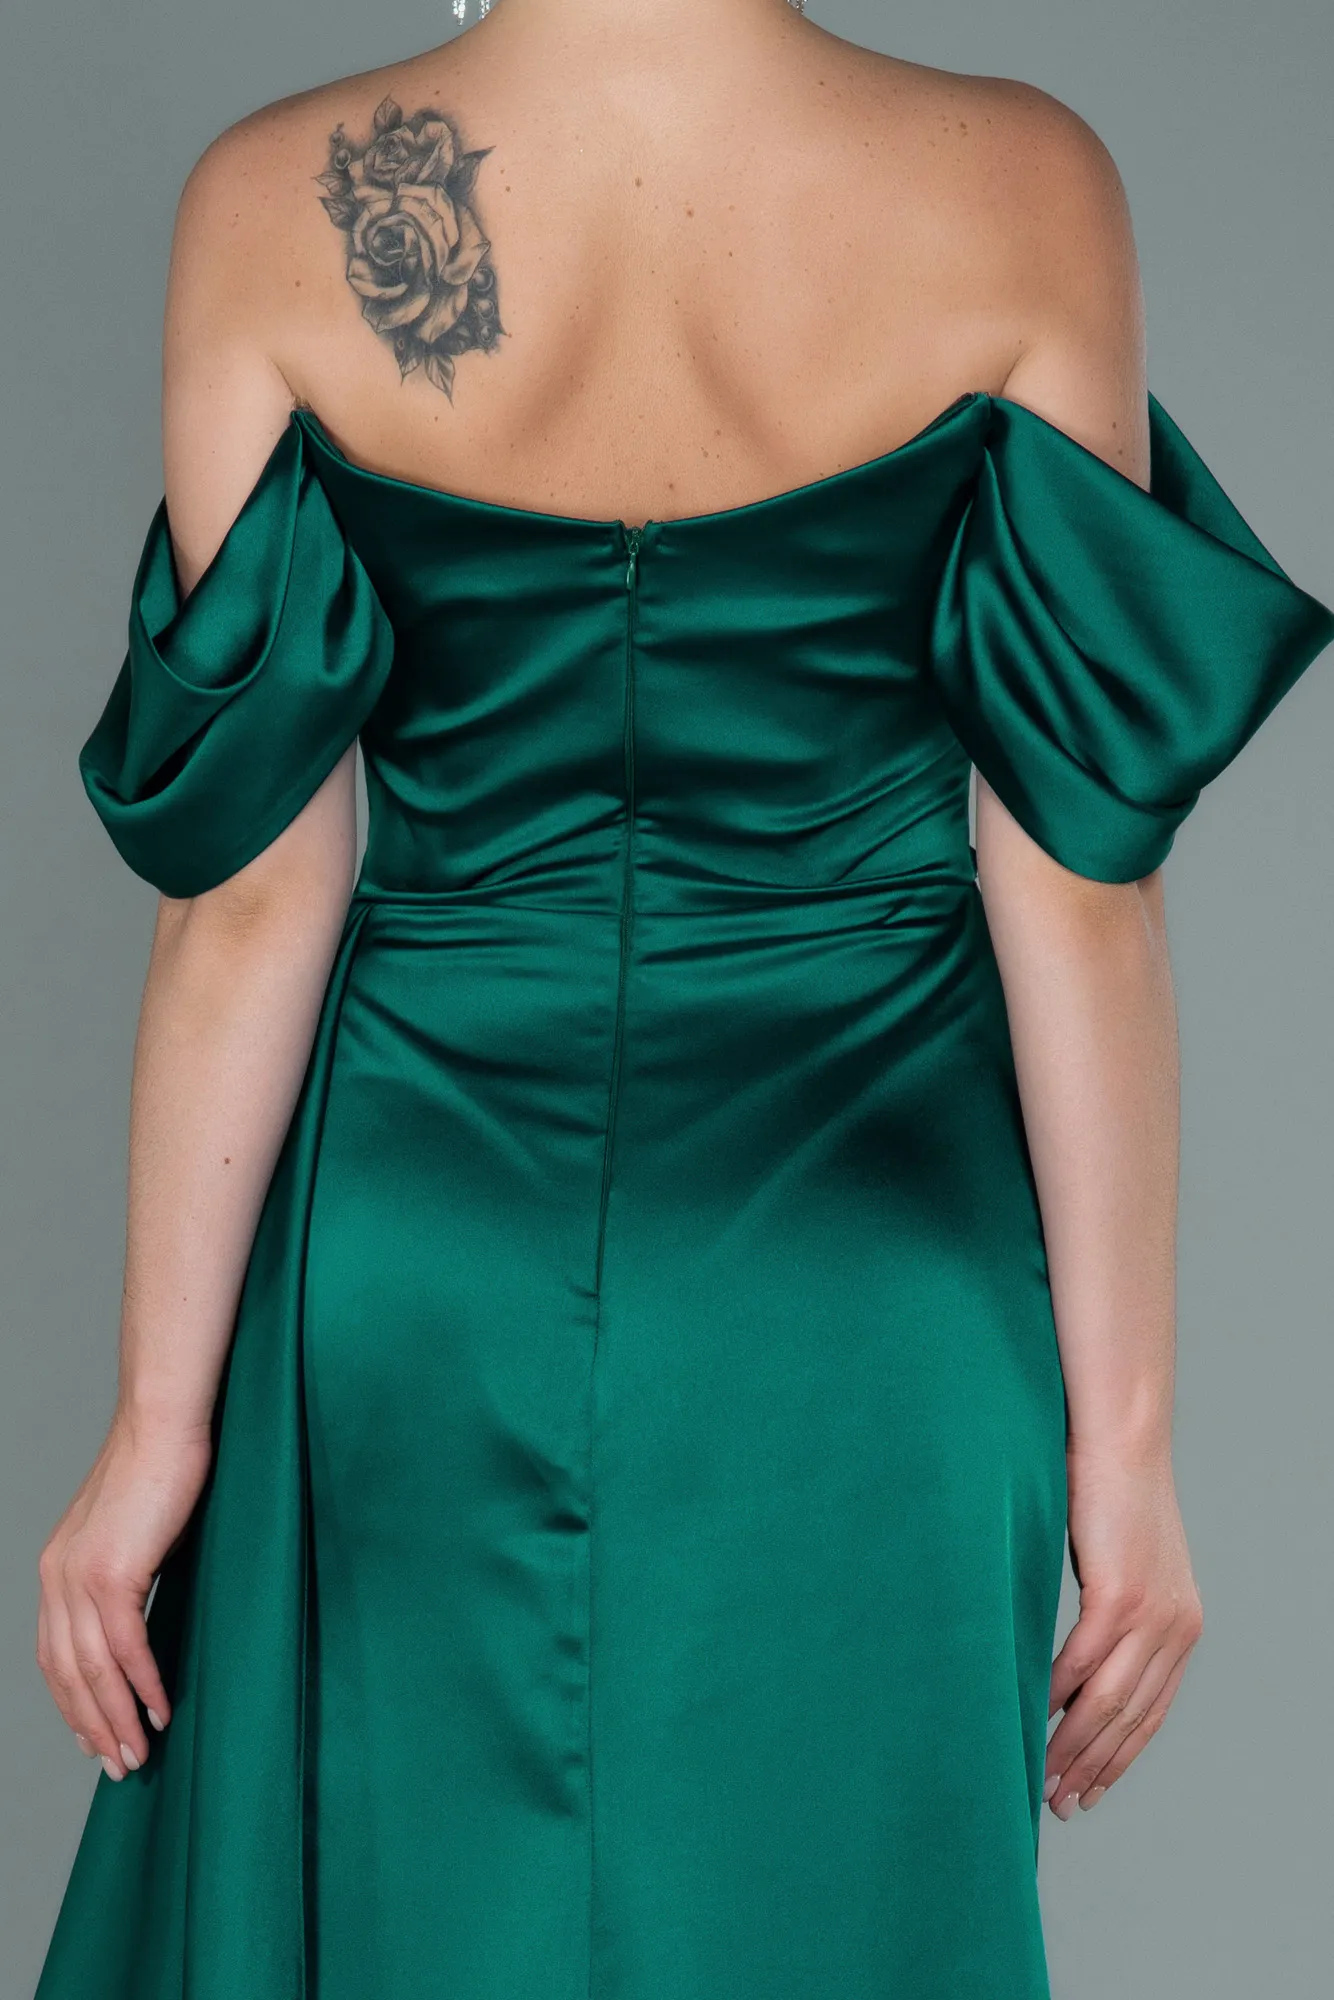 Emerald Green-Long Satin Evening Dress ABU2661